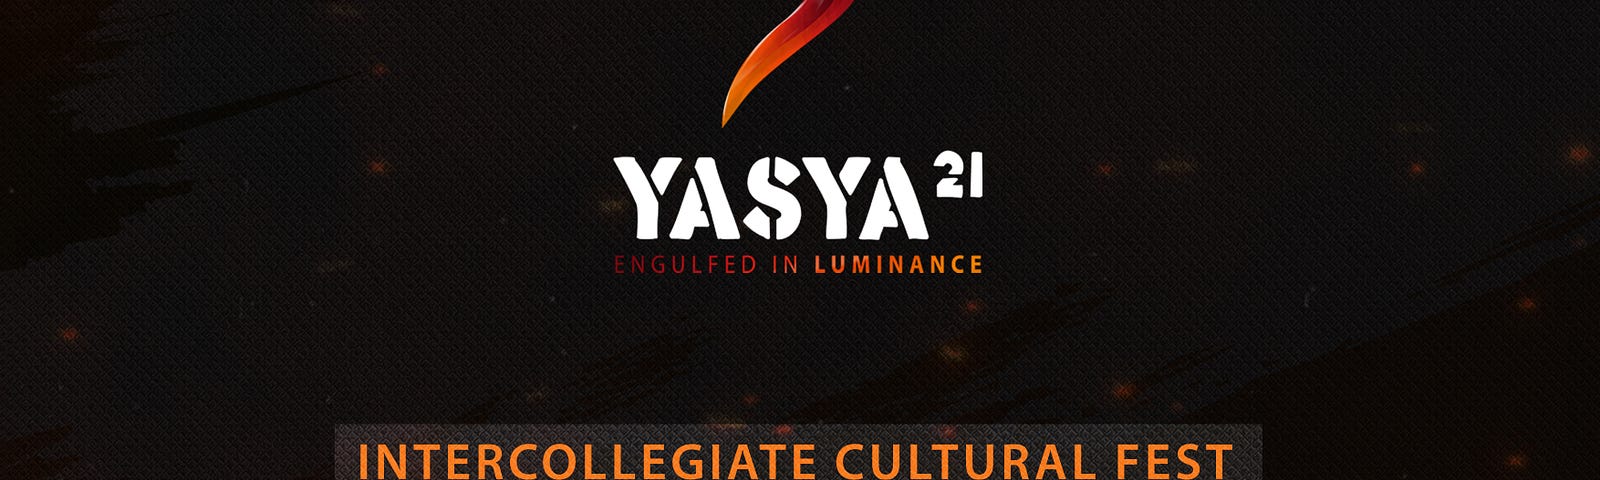 Yasya 21 Live on Sociana